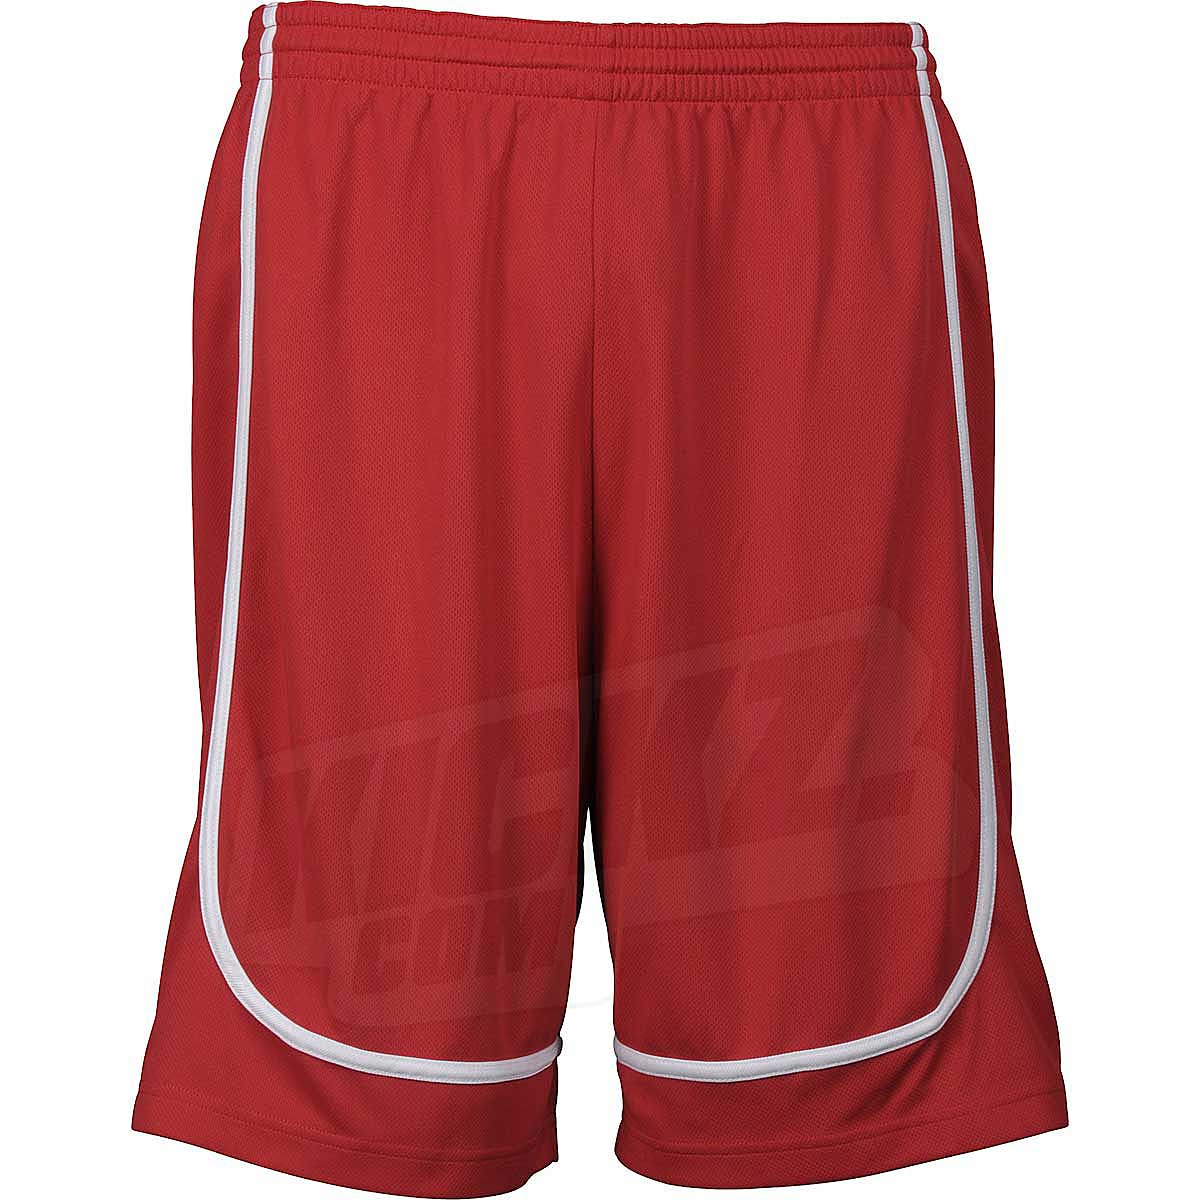 K1X Hardwood League Uniform Shorts, True Red/White